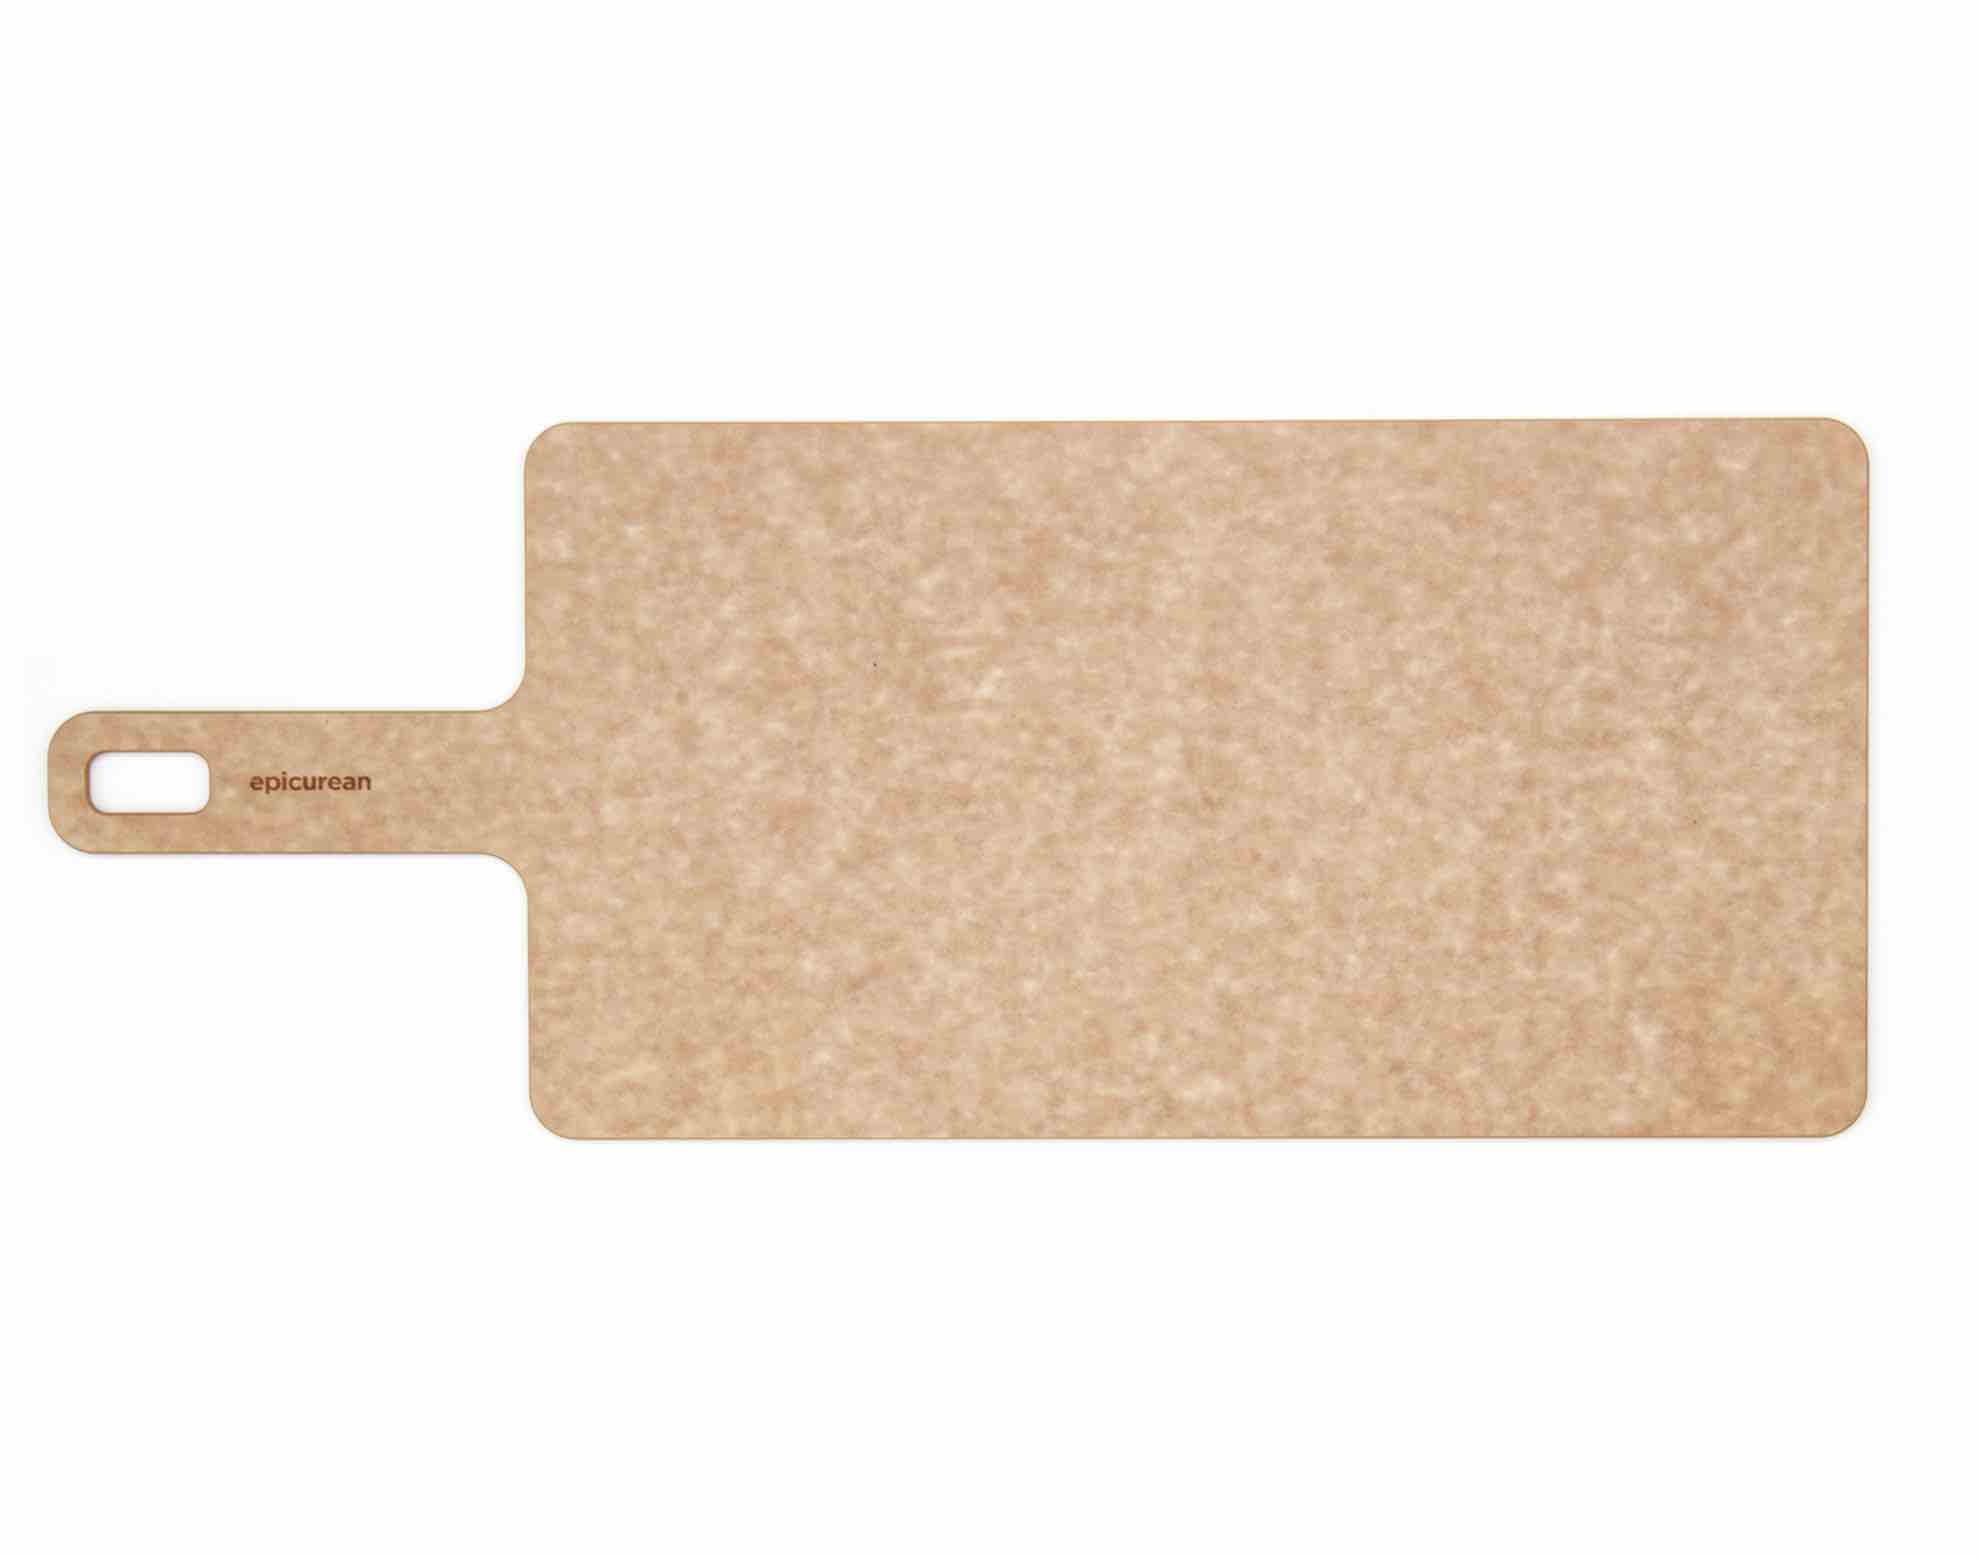 Epicurean Handy Series 14x7.5" Cutting Board